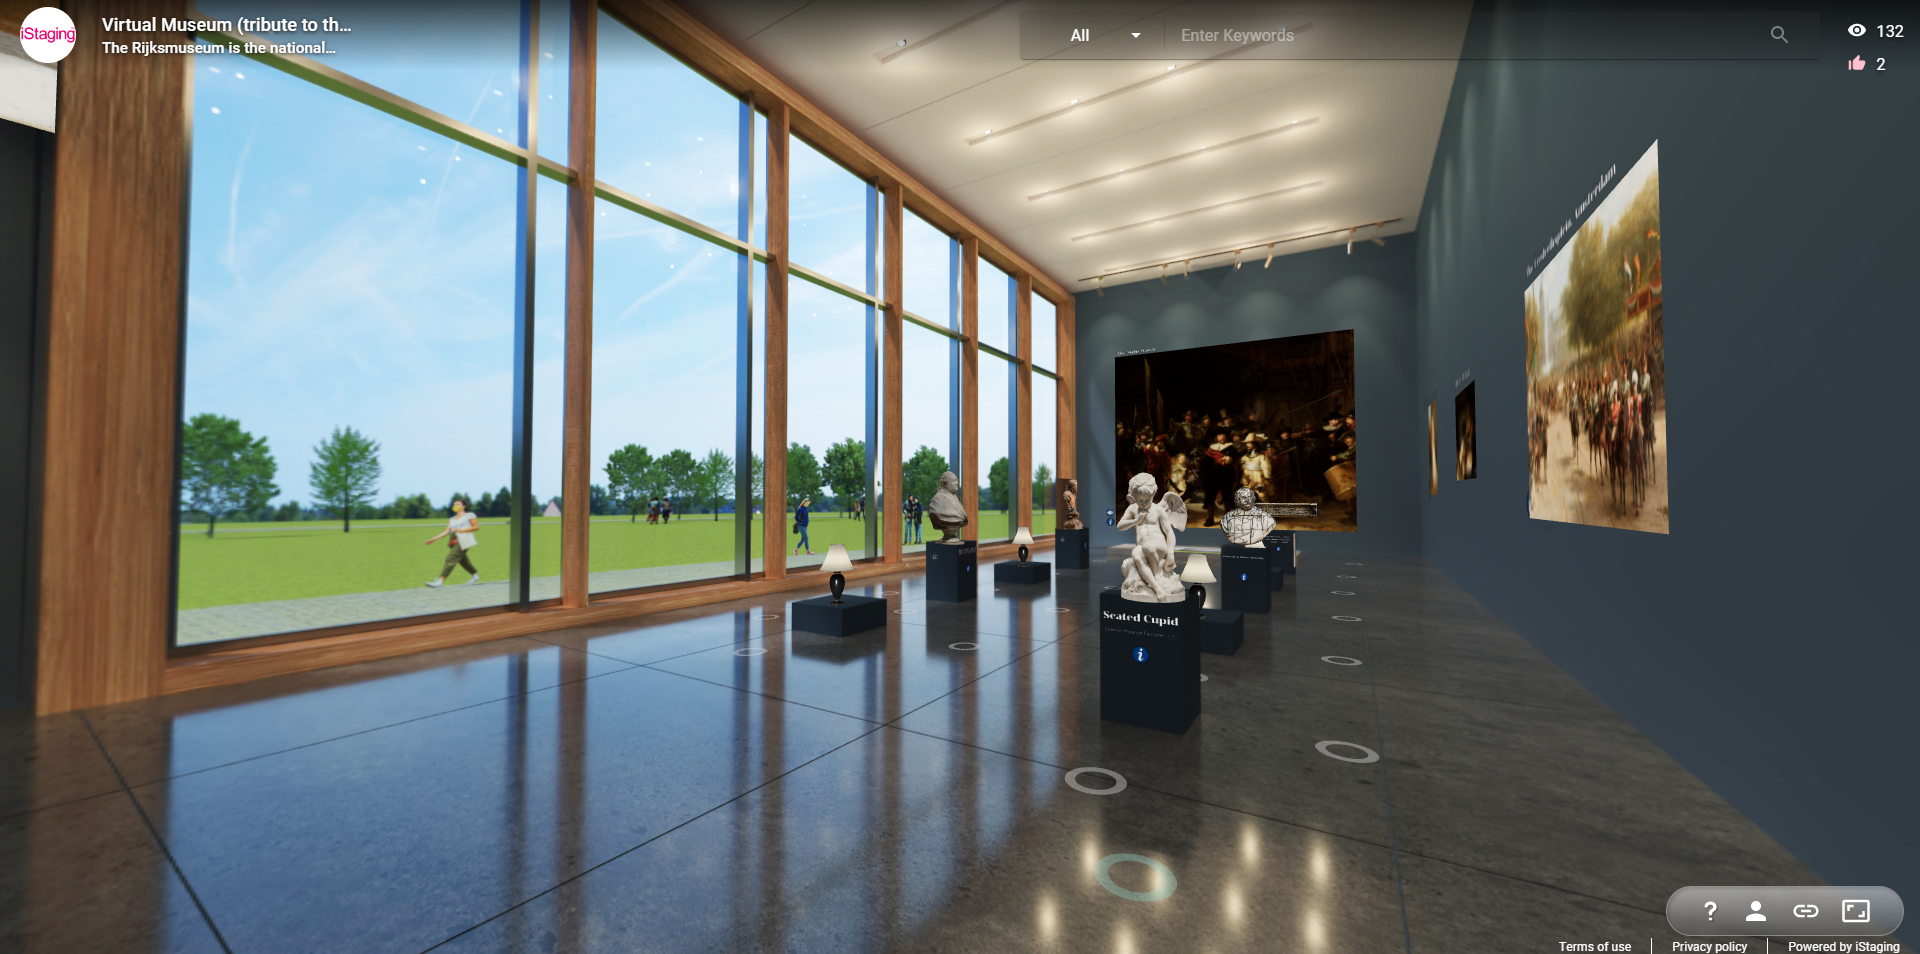 Virtual museum (Rijksmuseum tribute)